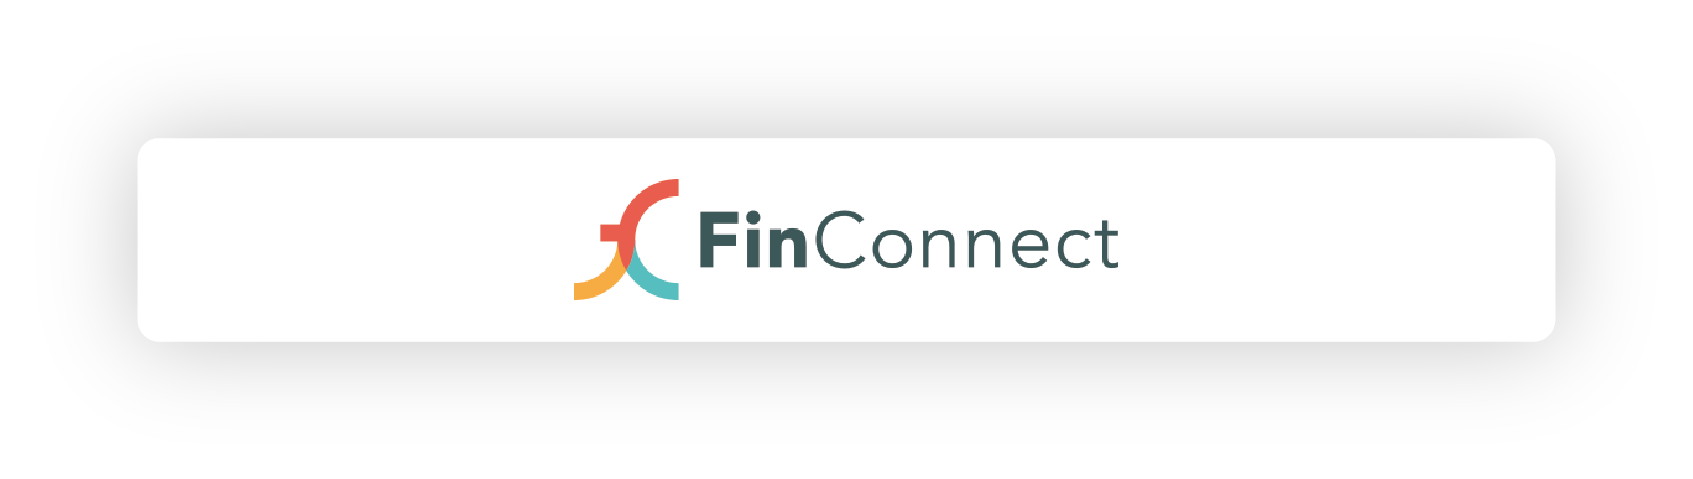 Finconnect koppeling